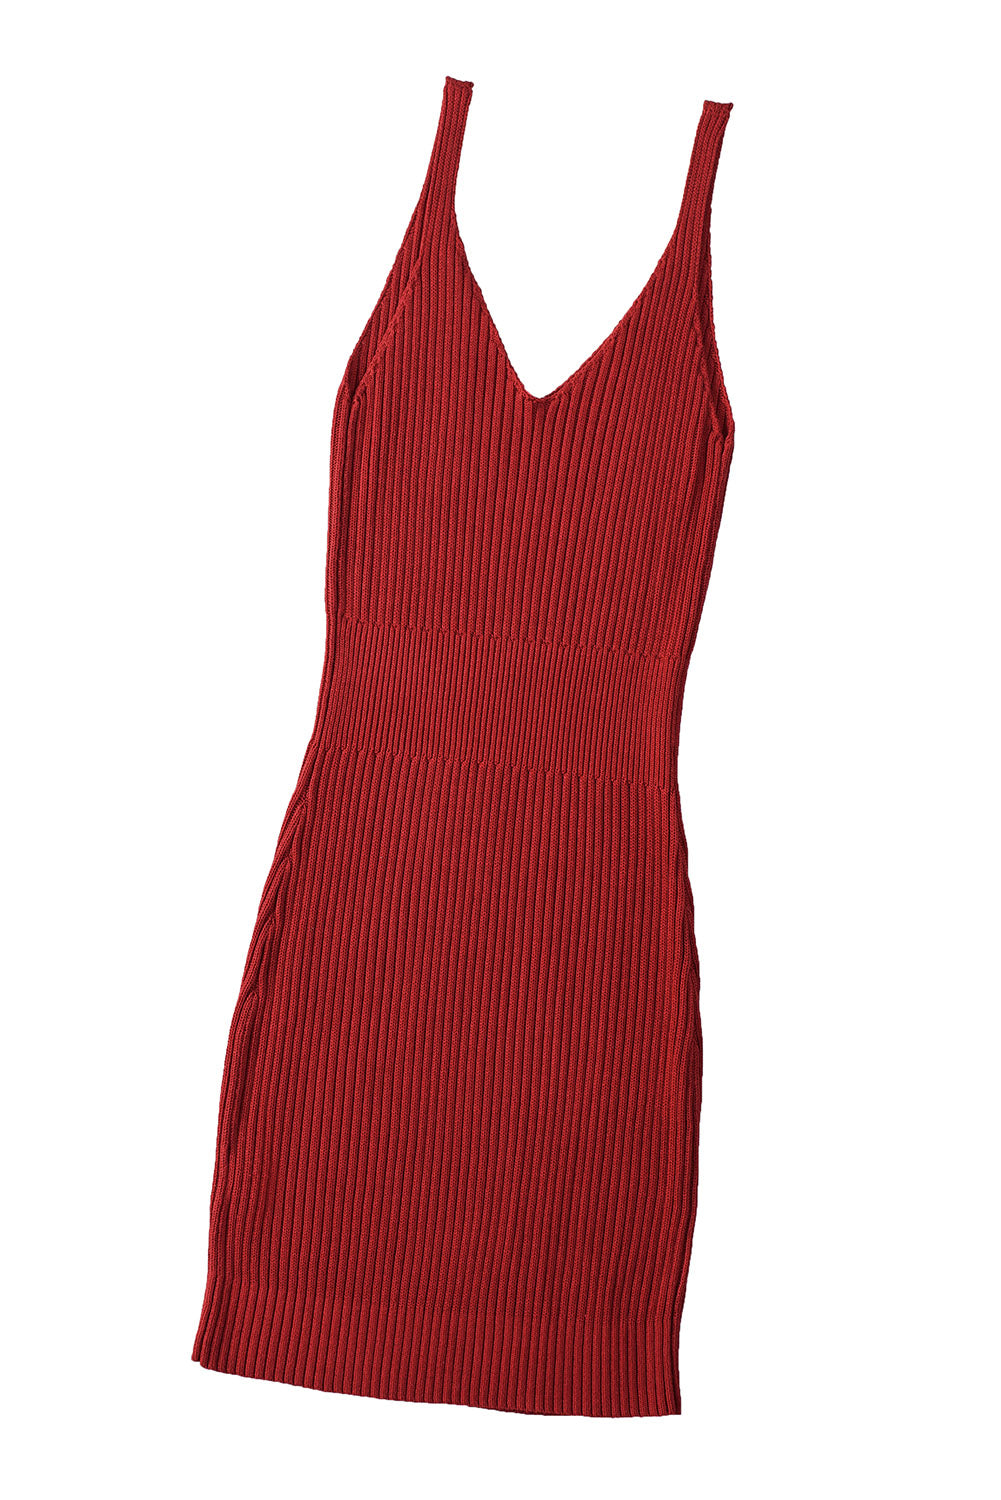 LC2211331-3-S, LC2211331-3-M, LC2211331-3-L, LC2211331-3-XL, LC2211331-3-2XL, Red Women's Summer Tank Dress Knit V Neck Sleeveless Bodycon Ribbed Dresses